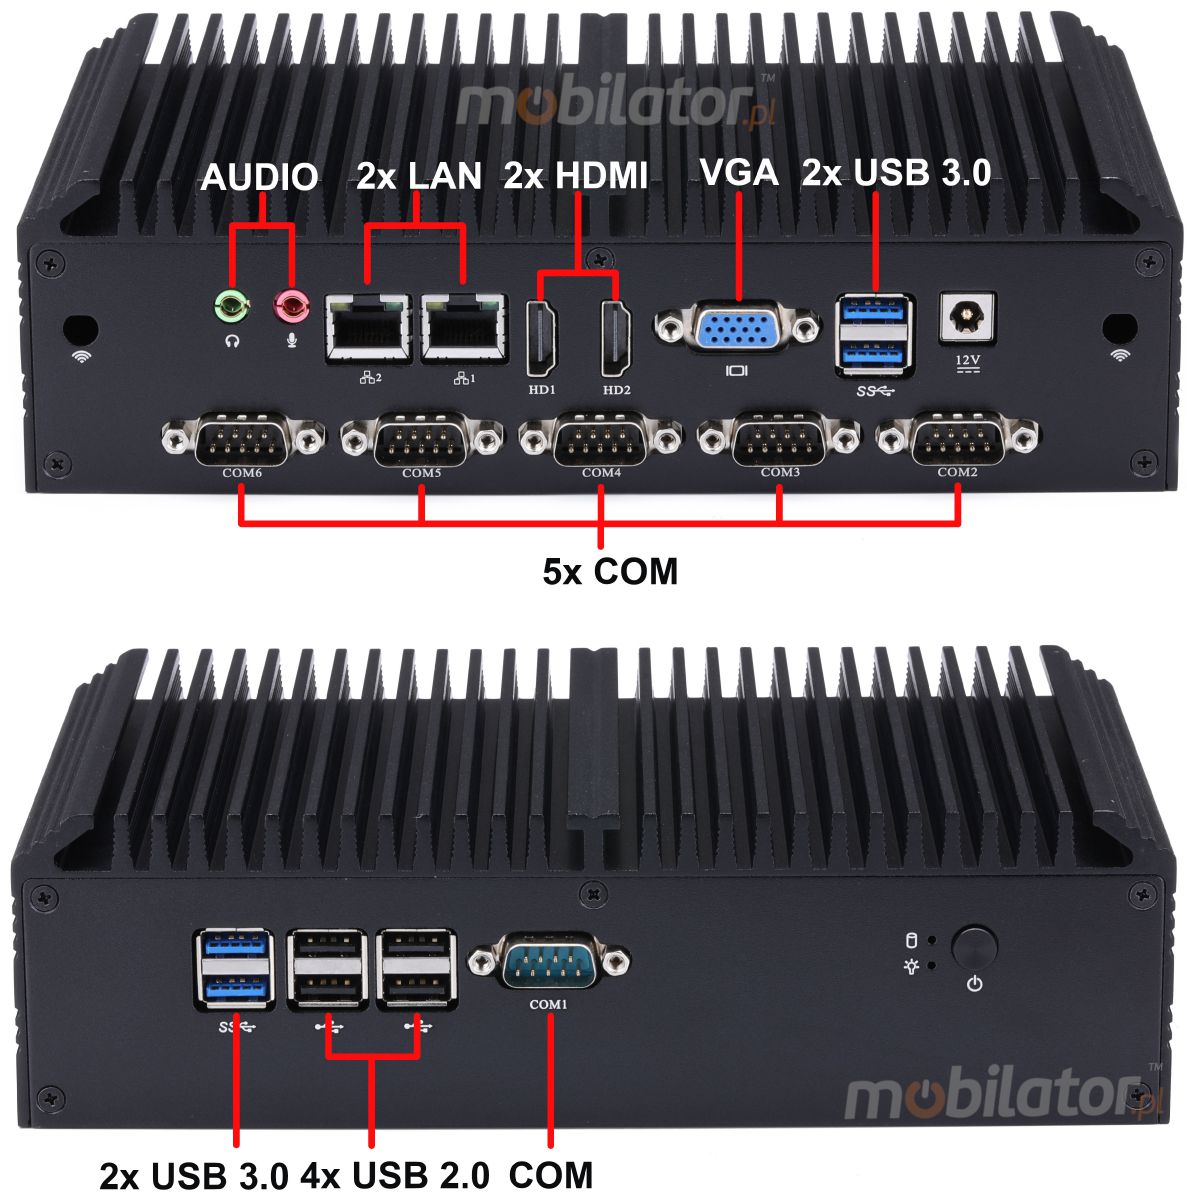 mBox X105 v.6 - Durable Mini Computer with 500GB HDD / 16GB RAM / Wifi + Bluetooth / 2 HDMI ports (6x RS-232, 4x USB 3.0) - Interfaces